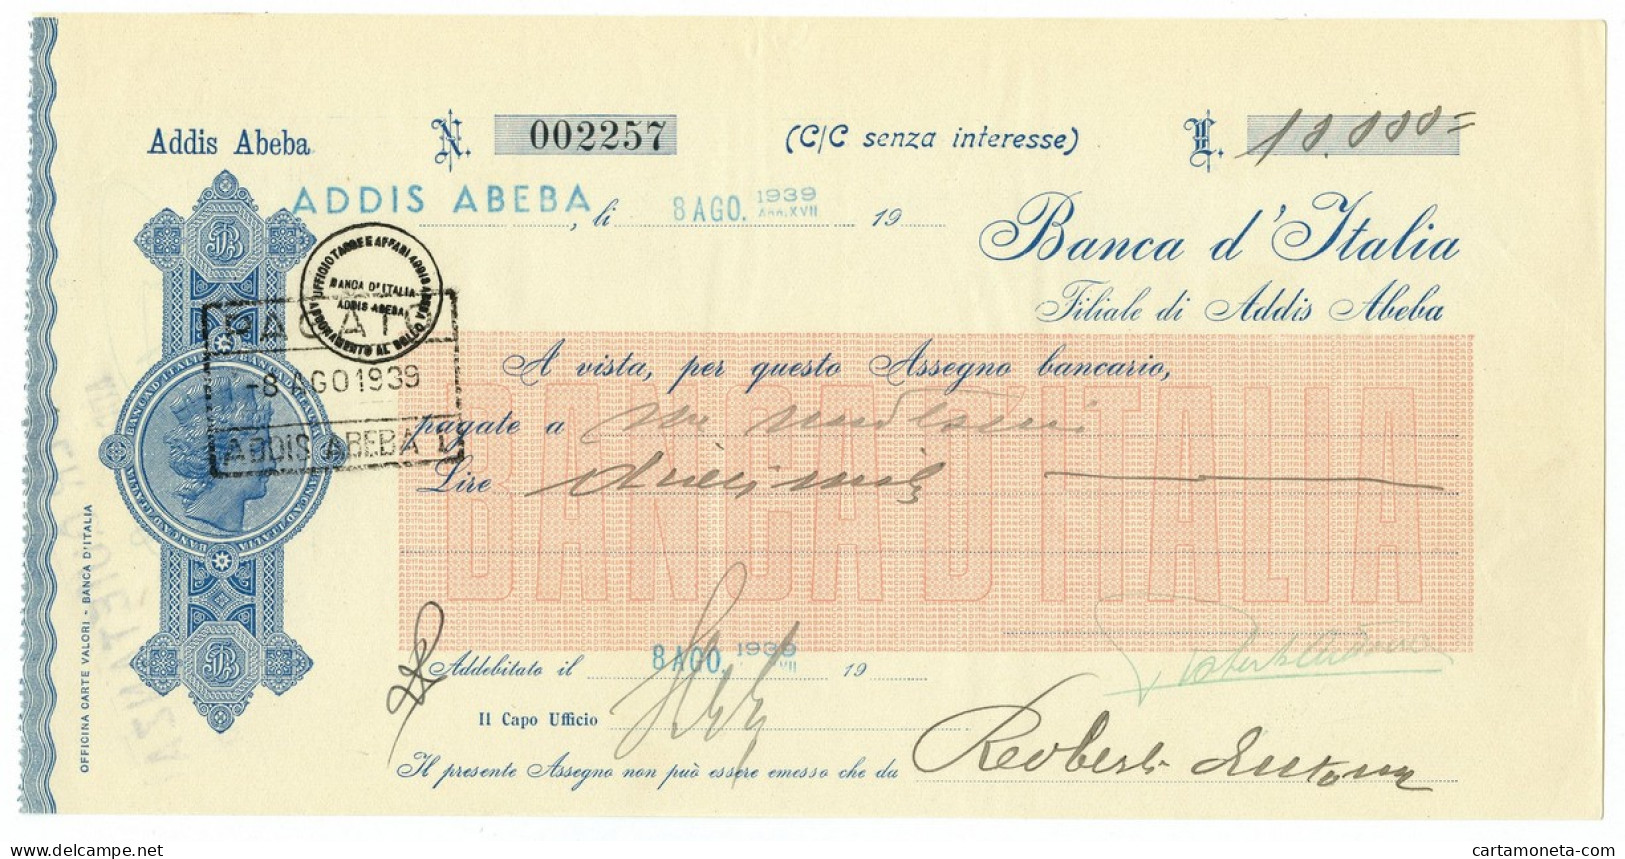 10000 LIRE ASSEGNO BANCA D'ITALIA FILALE ADDIS ABEBA MOD. ROSSO 08/08/1939 SUP - Africa Oriental Italiana